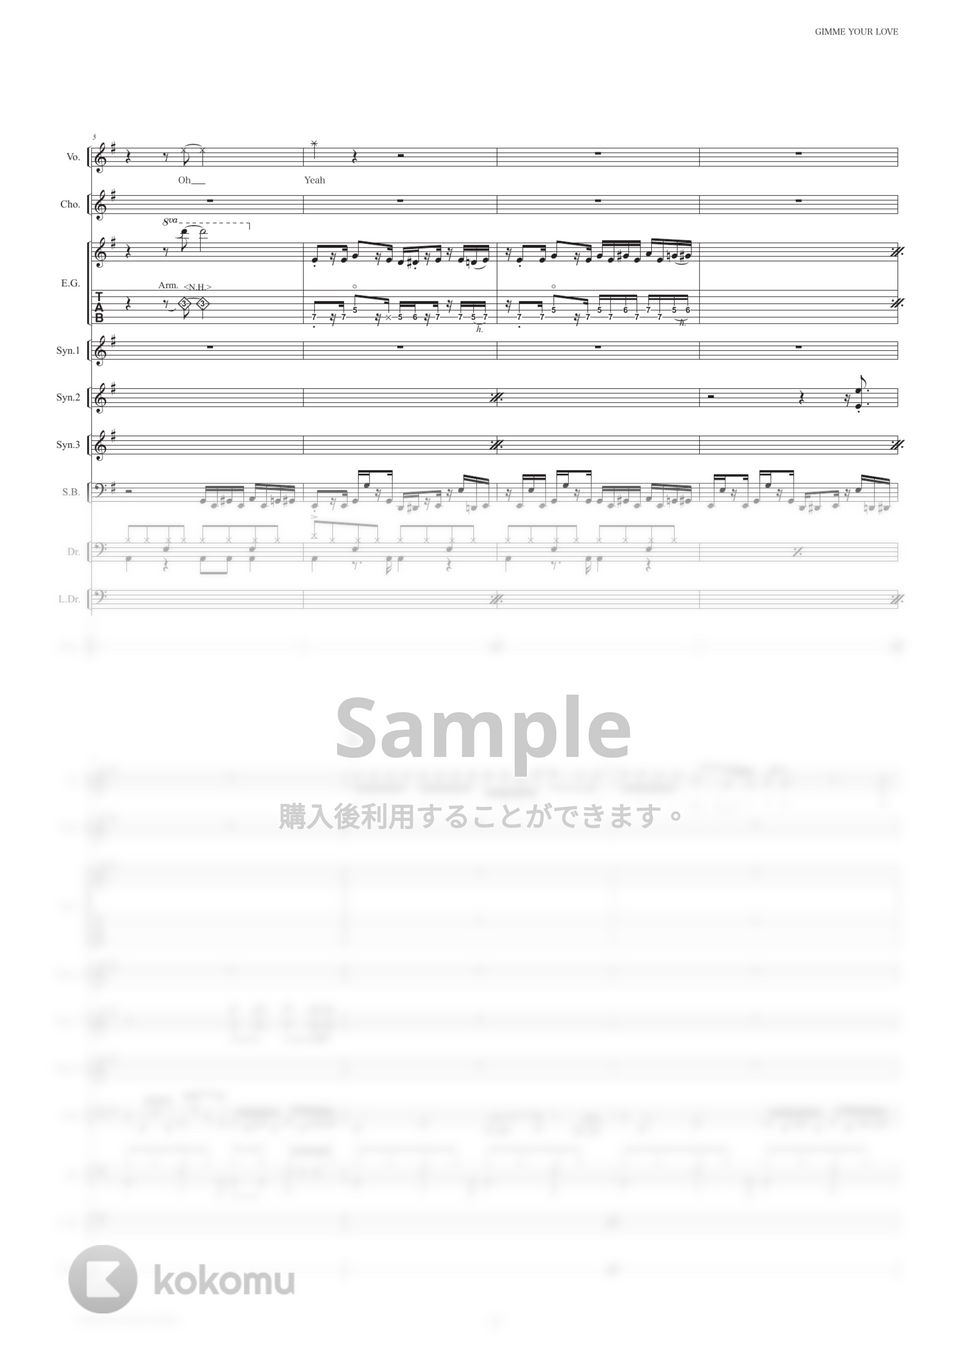 B'z - GIMME YOUR LOVE ～不屈のLOVE DRIVER～ (バンドスコア) by TRIAD GUITAR SCHOOL